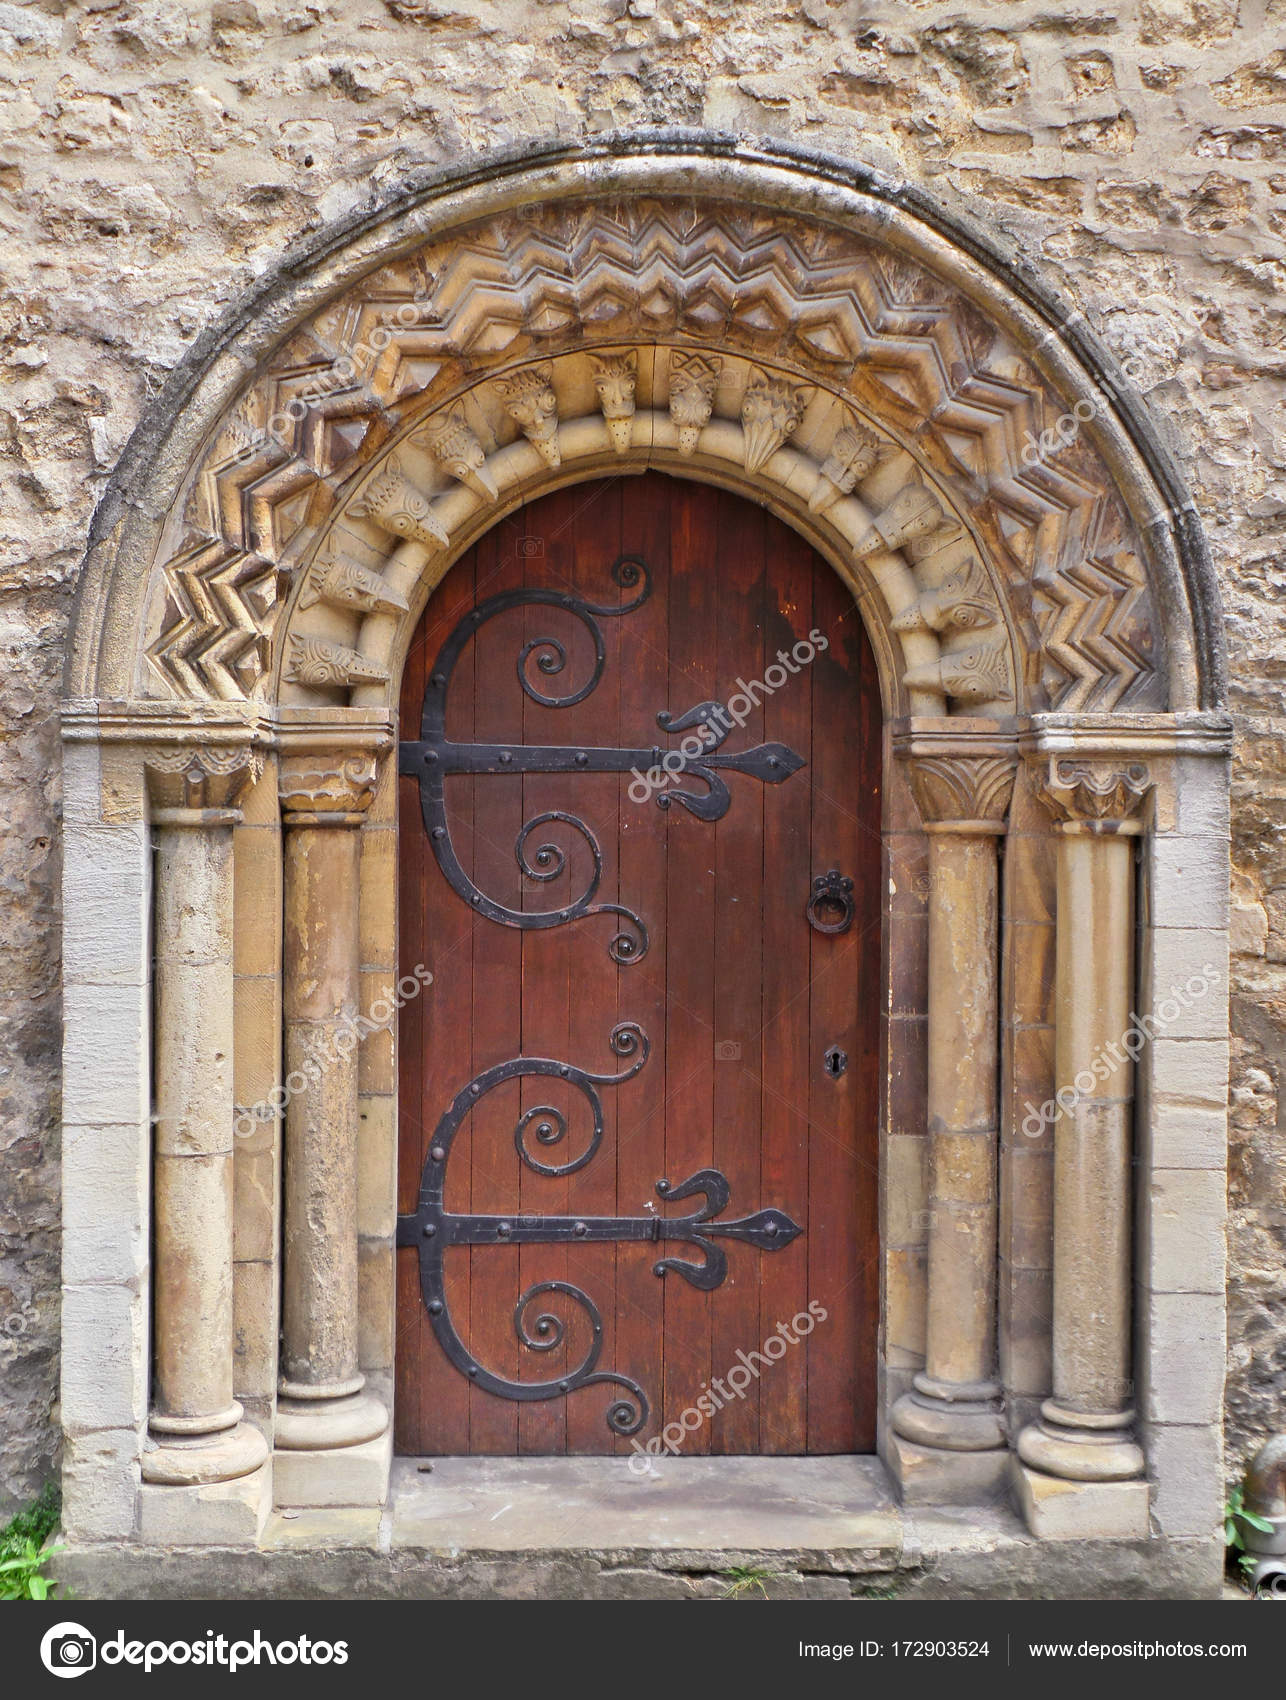 Wooden Church Door — Stock Photo © RogerUtting #172903524